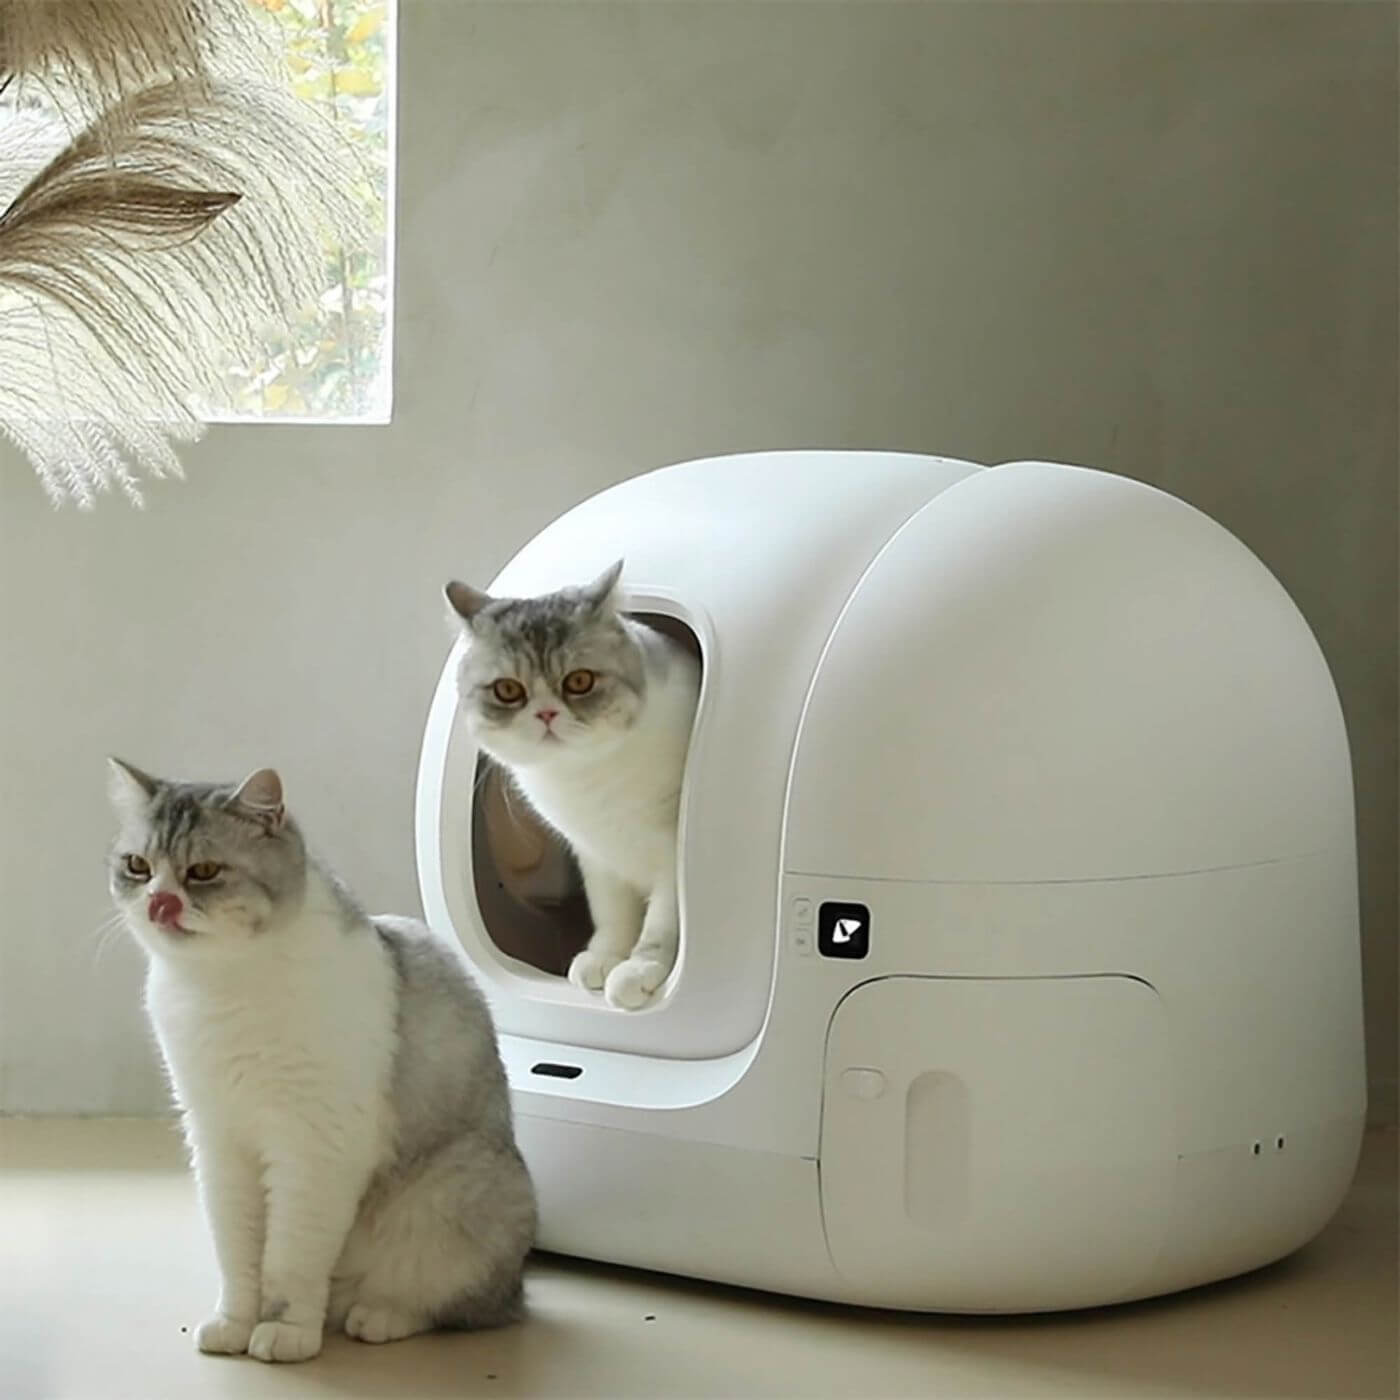 Zwei Katzen sitzen in einem automatischem Katzenklo